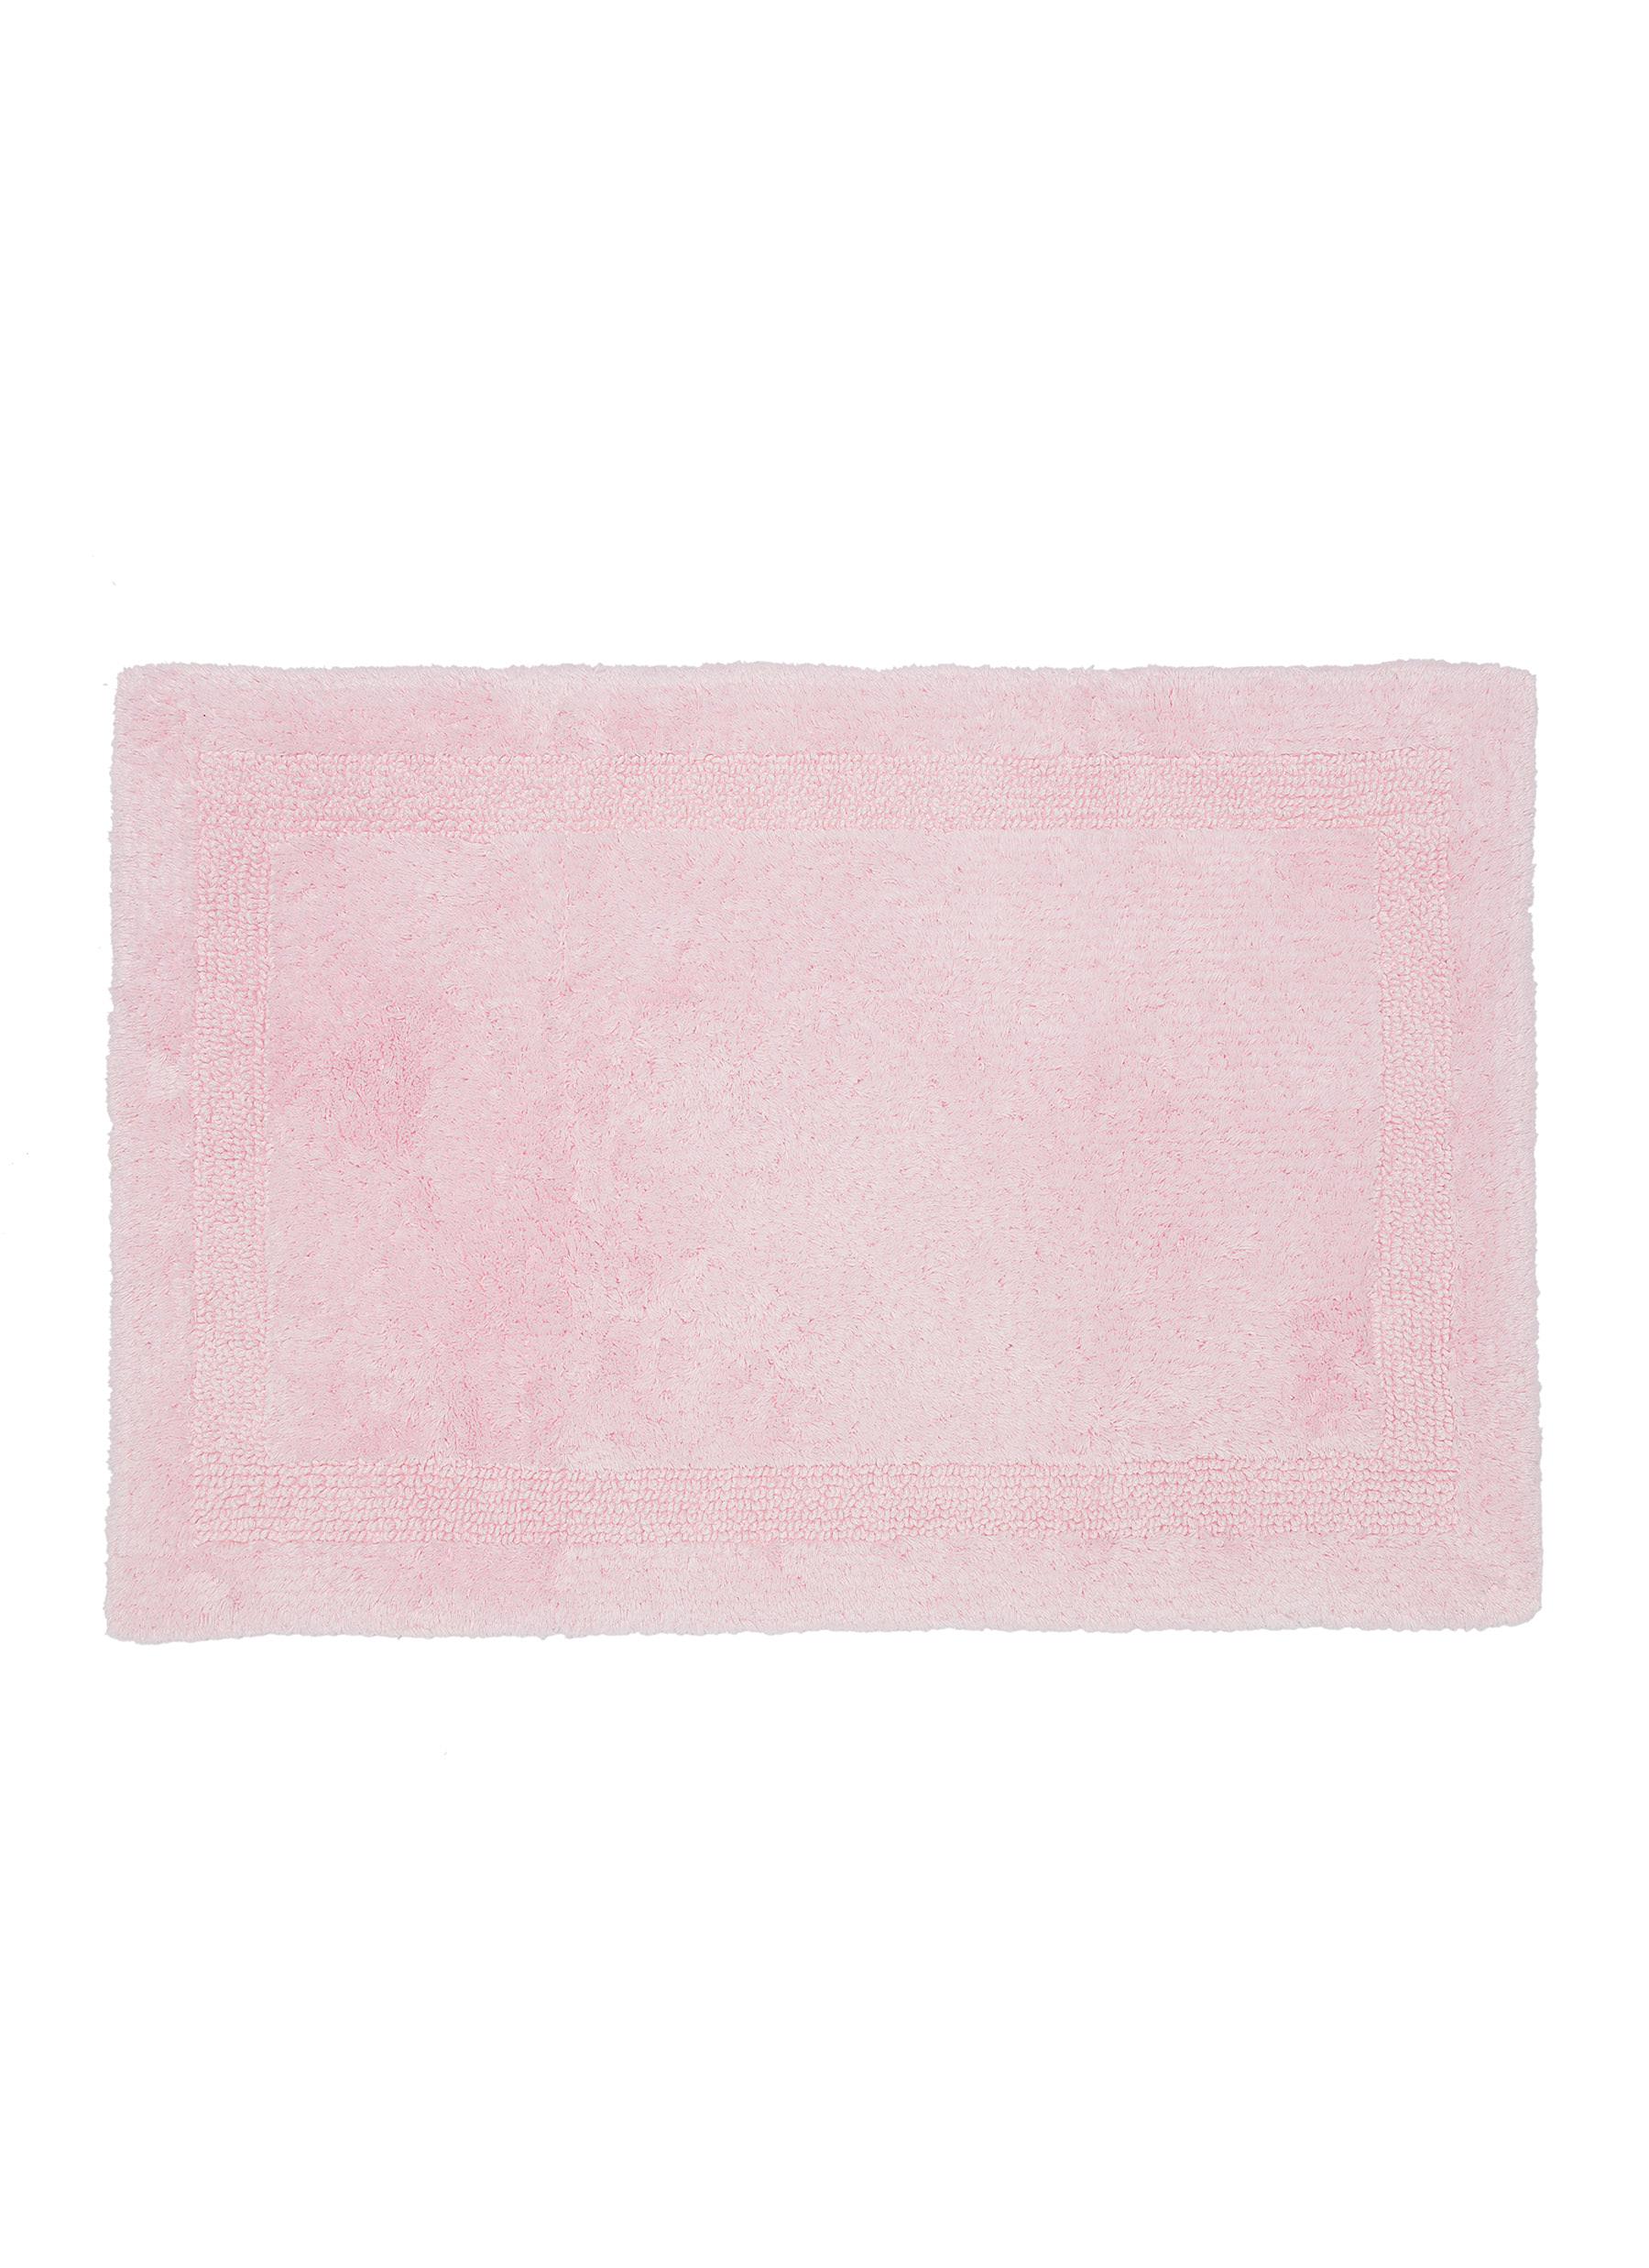 Abyss Reversible Cotton Bath Mat - Pink Lady